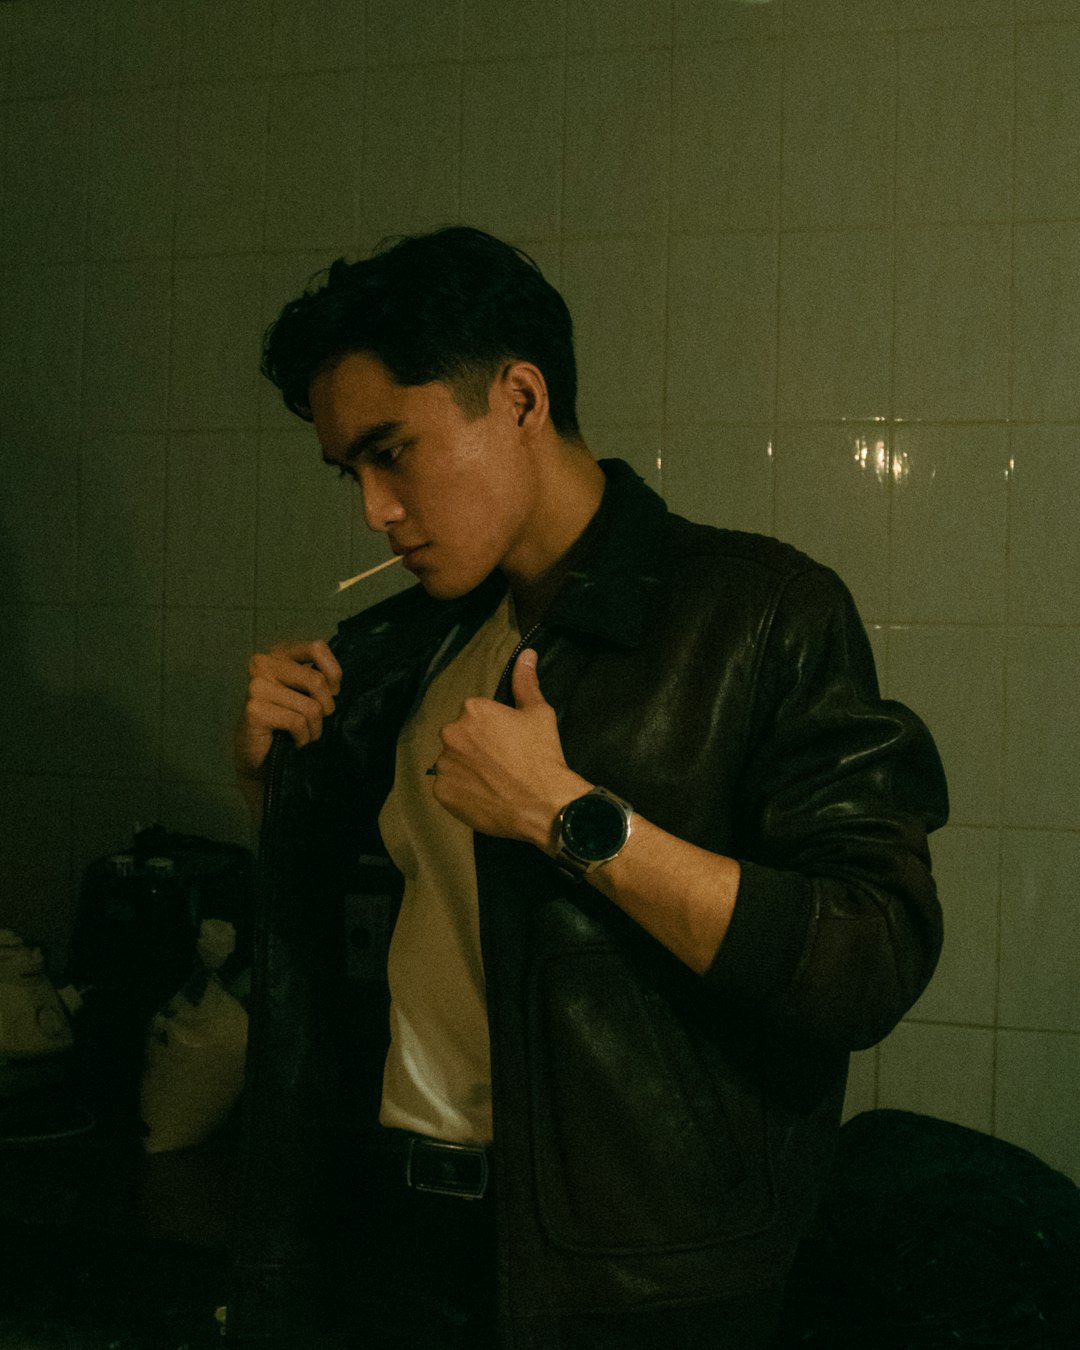 man in black leather jacket smoking cigarette